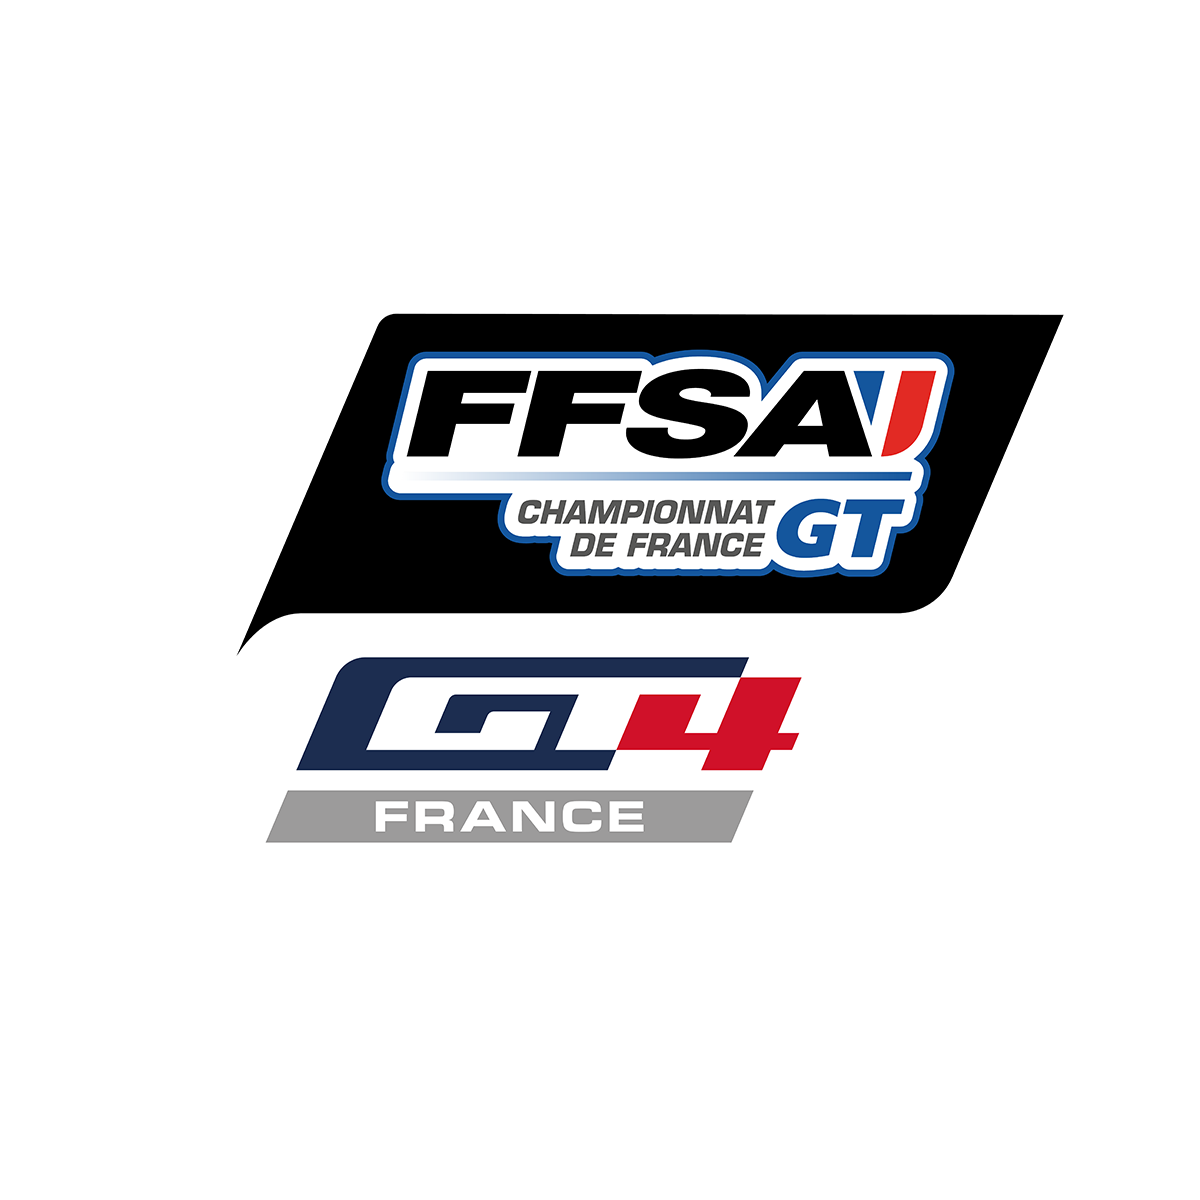 Championnat de France FFSA GT - GT4 France